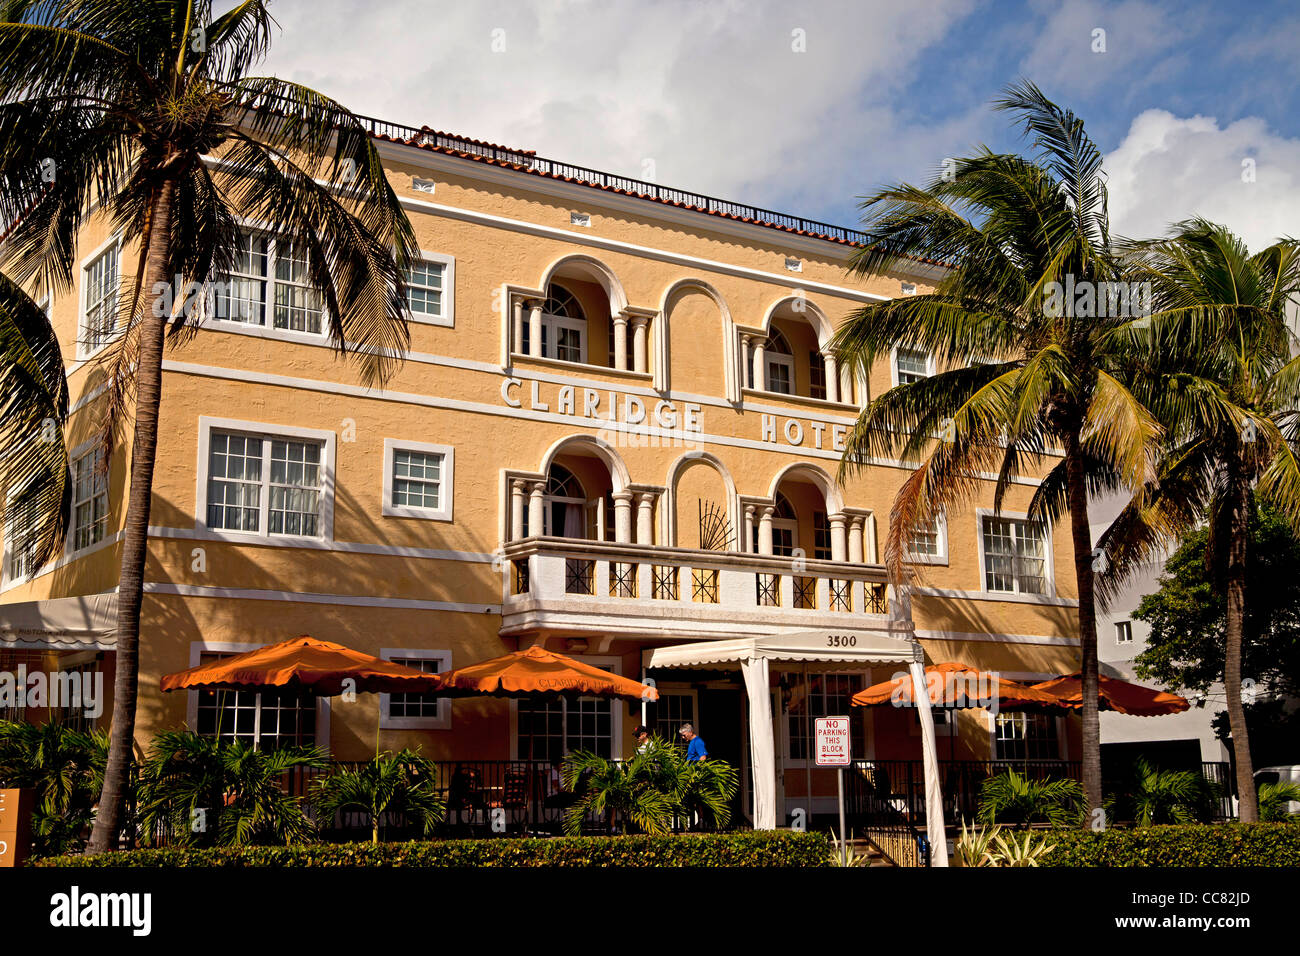 Claridge Hotel, South Beach, Miami, Floride, USA Banque D'Images